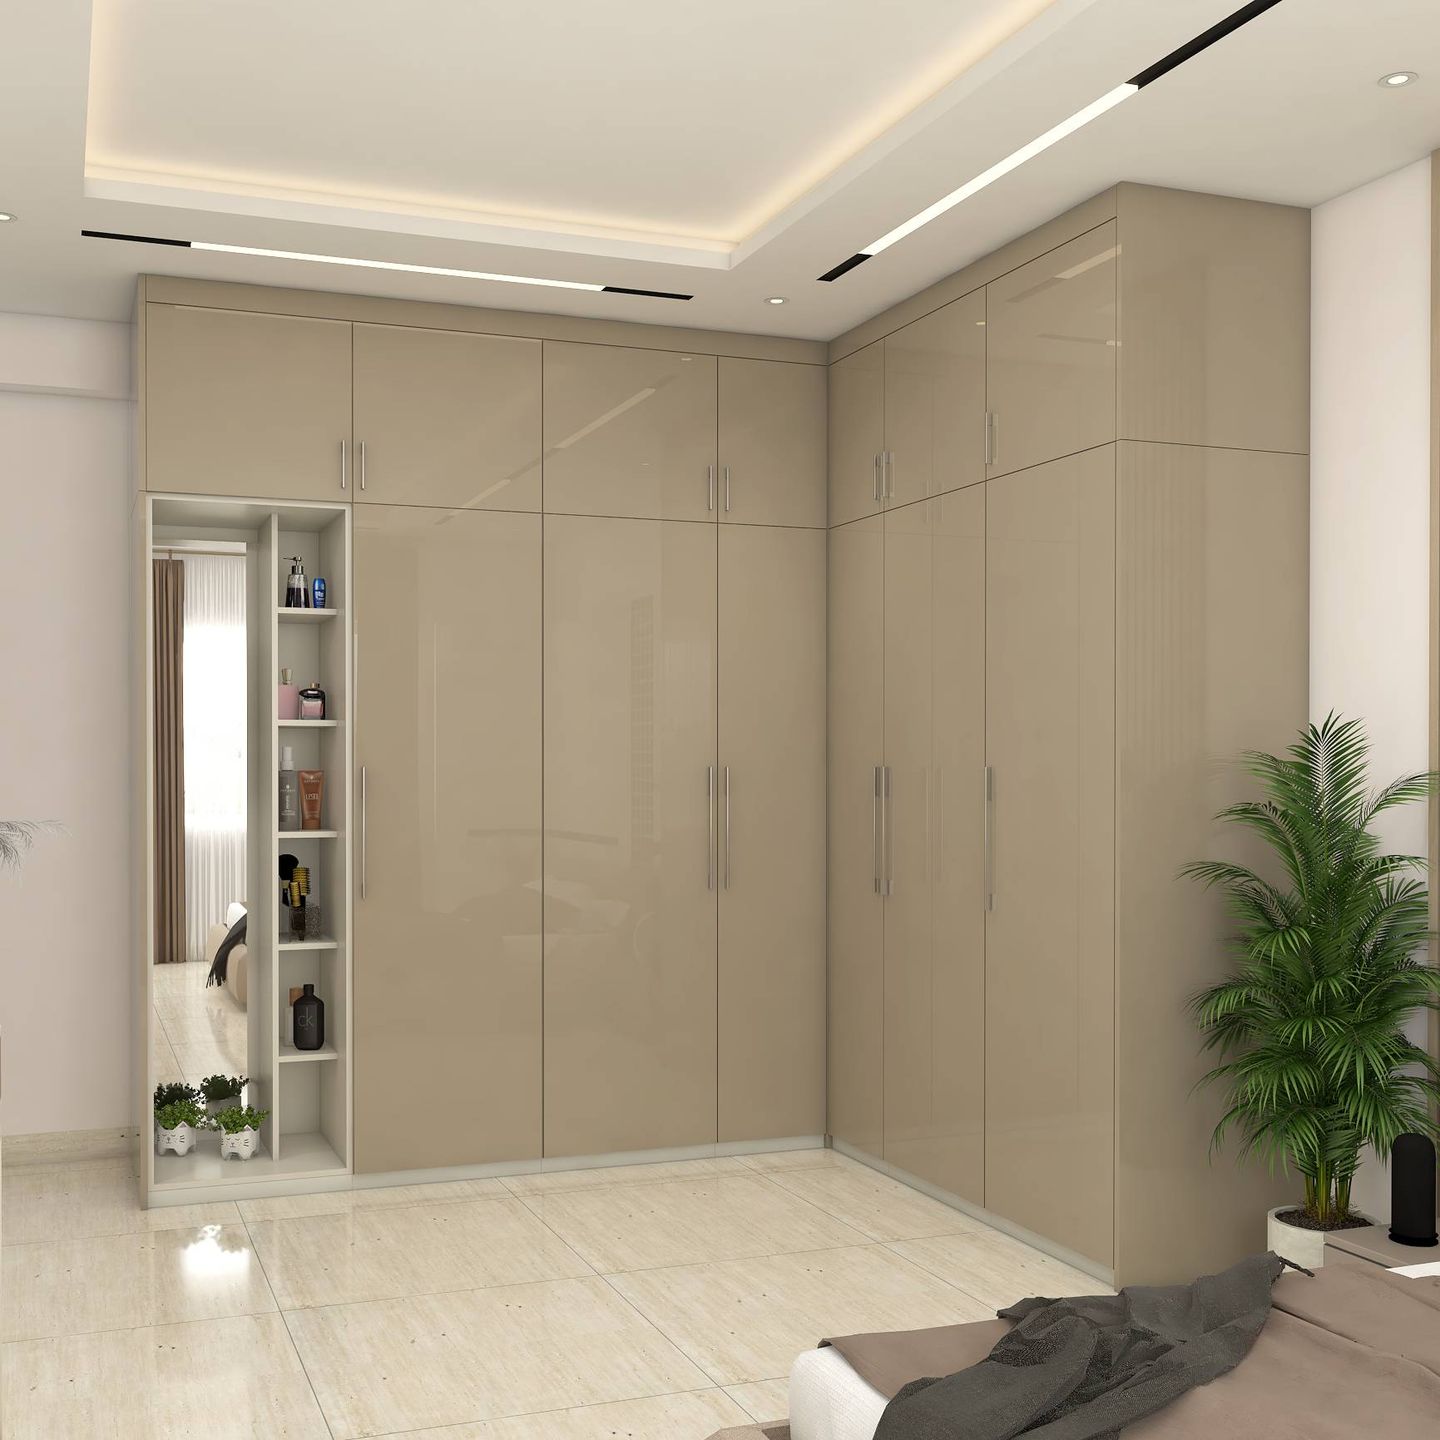 L-Shaped Swing Wardrobe Design With Loft Storage - Livspace